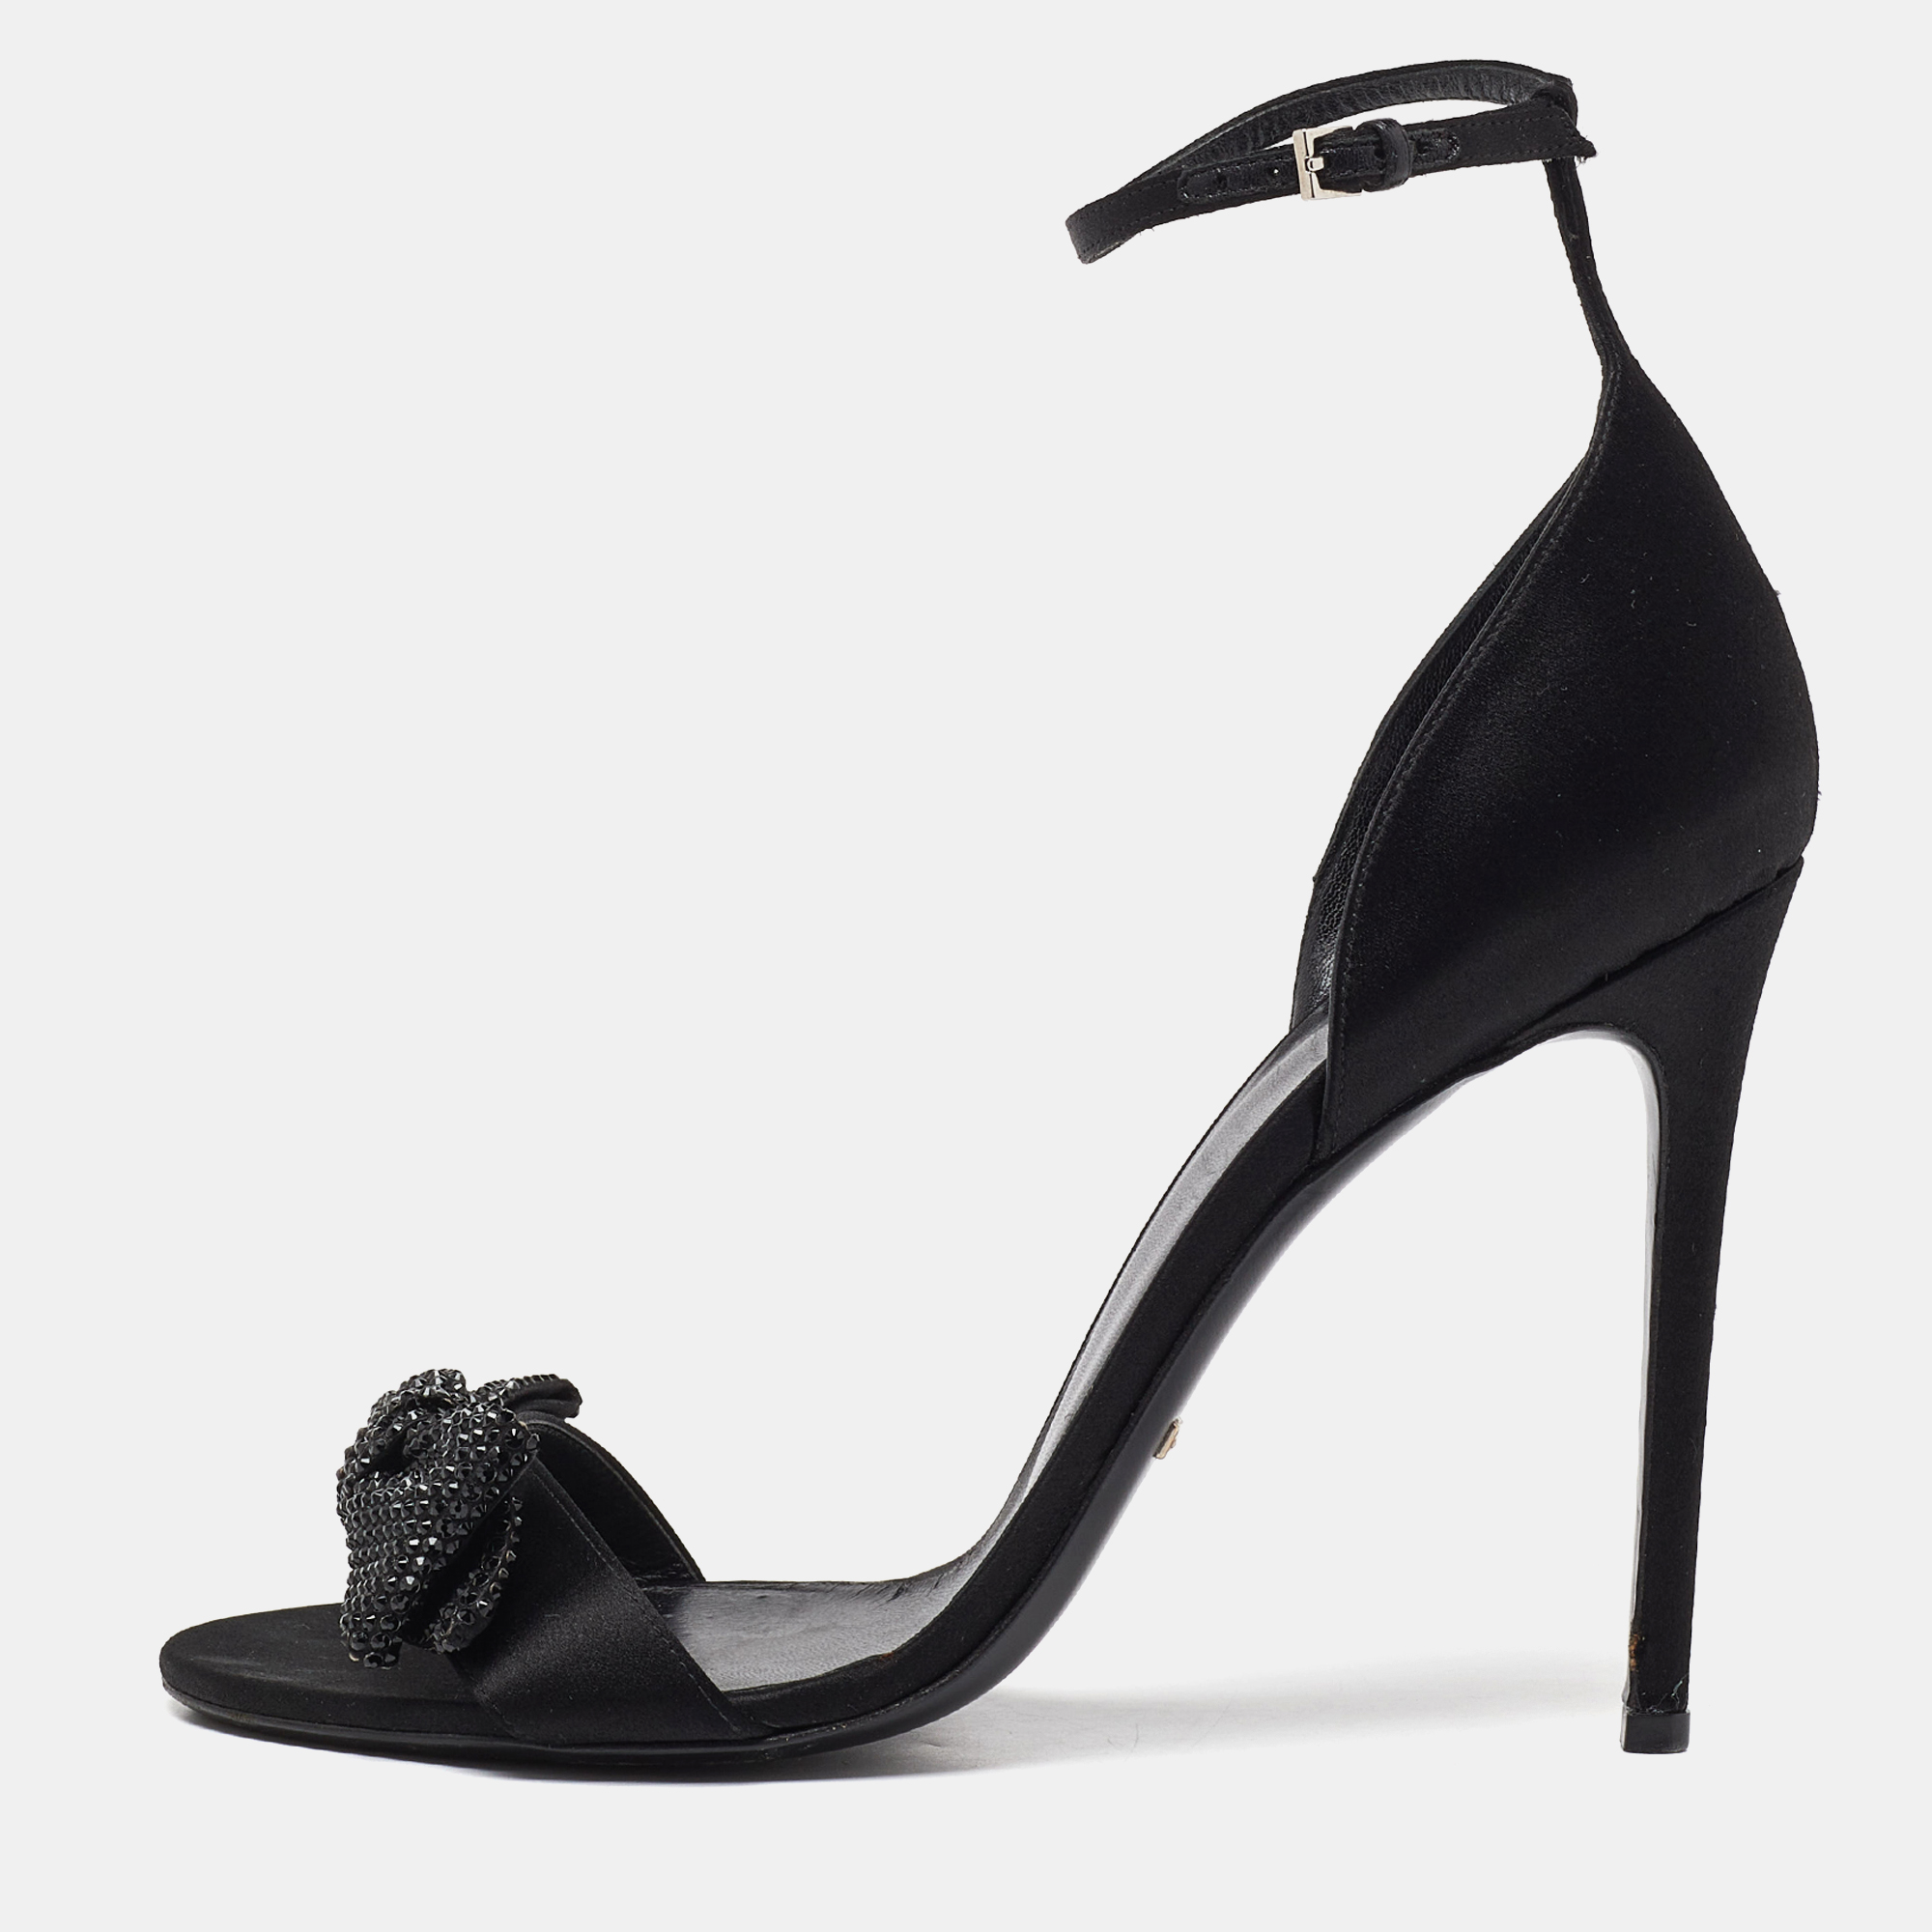 Gucci black satin crystal embellished bow open toe ankle strap sandals size 41